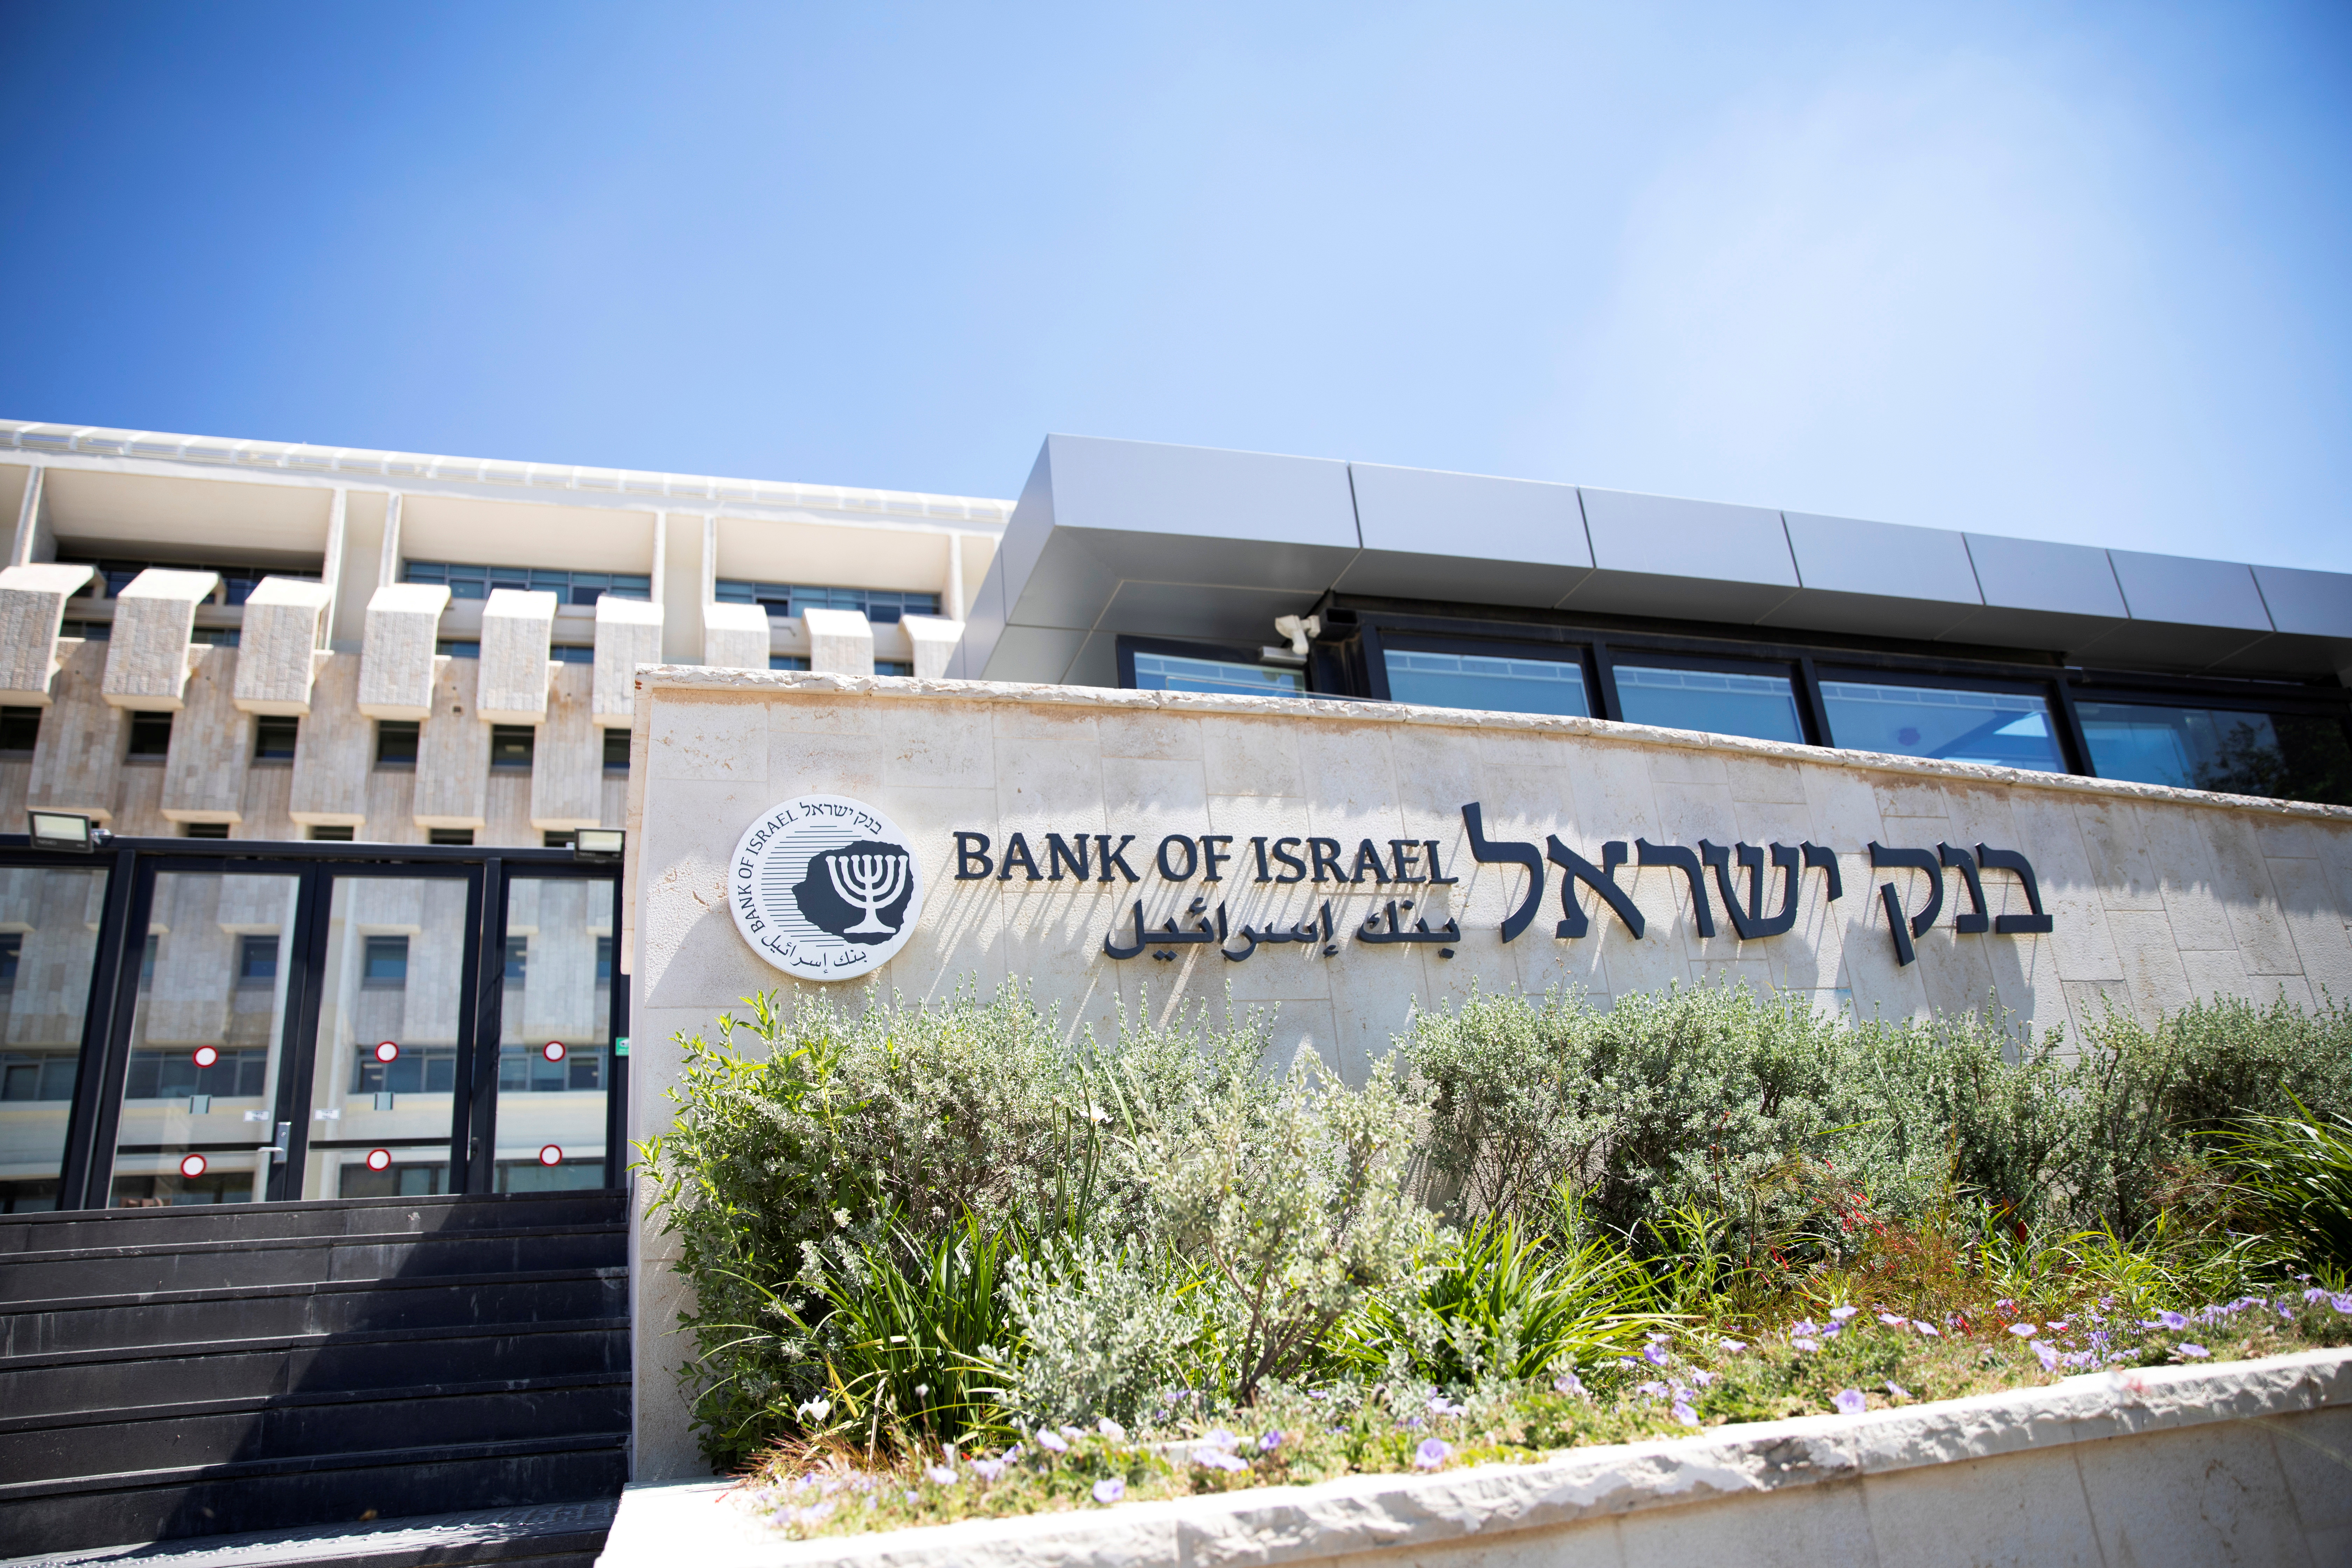 The Bank of Israel building is seen in Jerusalem